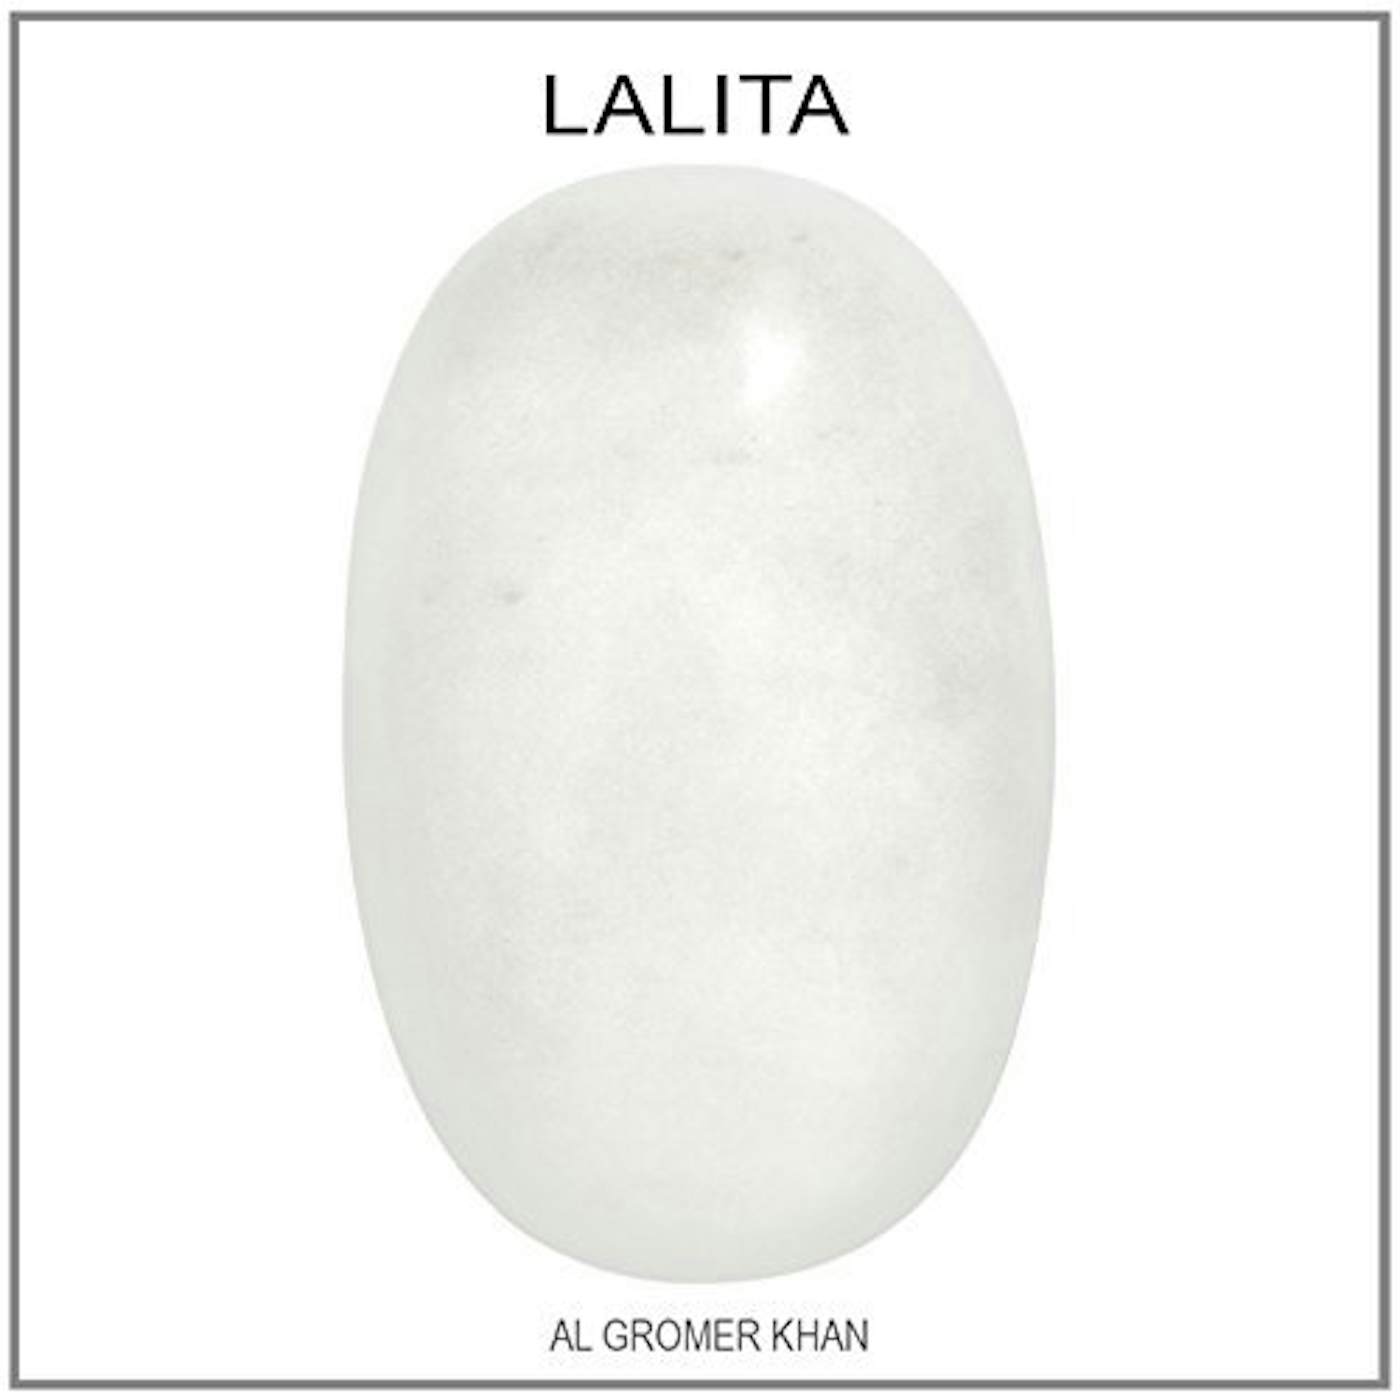 Al Gromer Khan LALITA CD